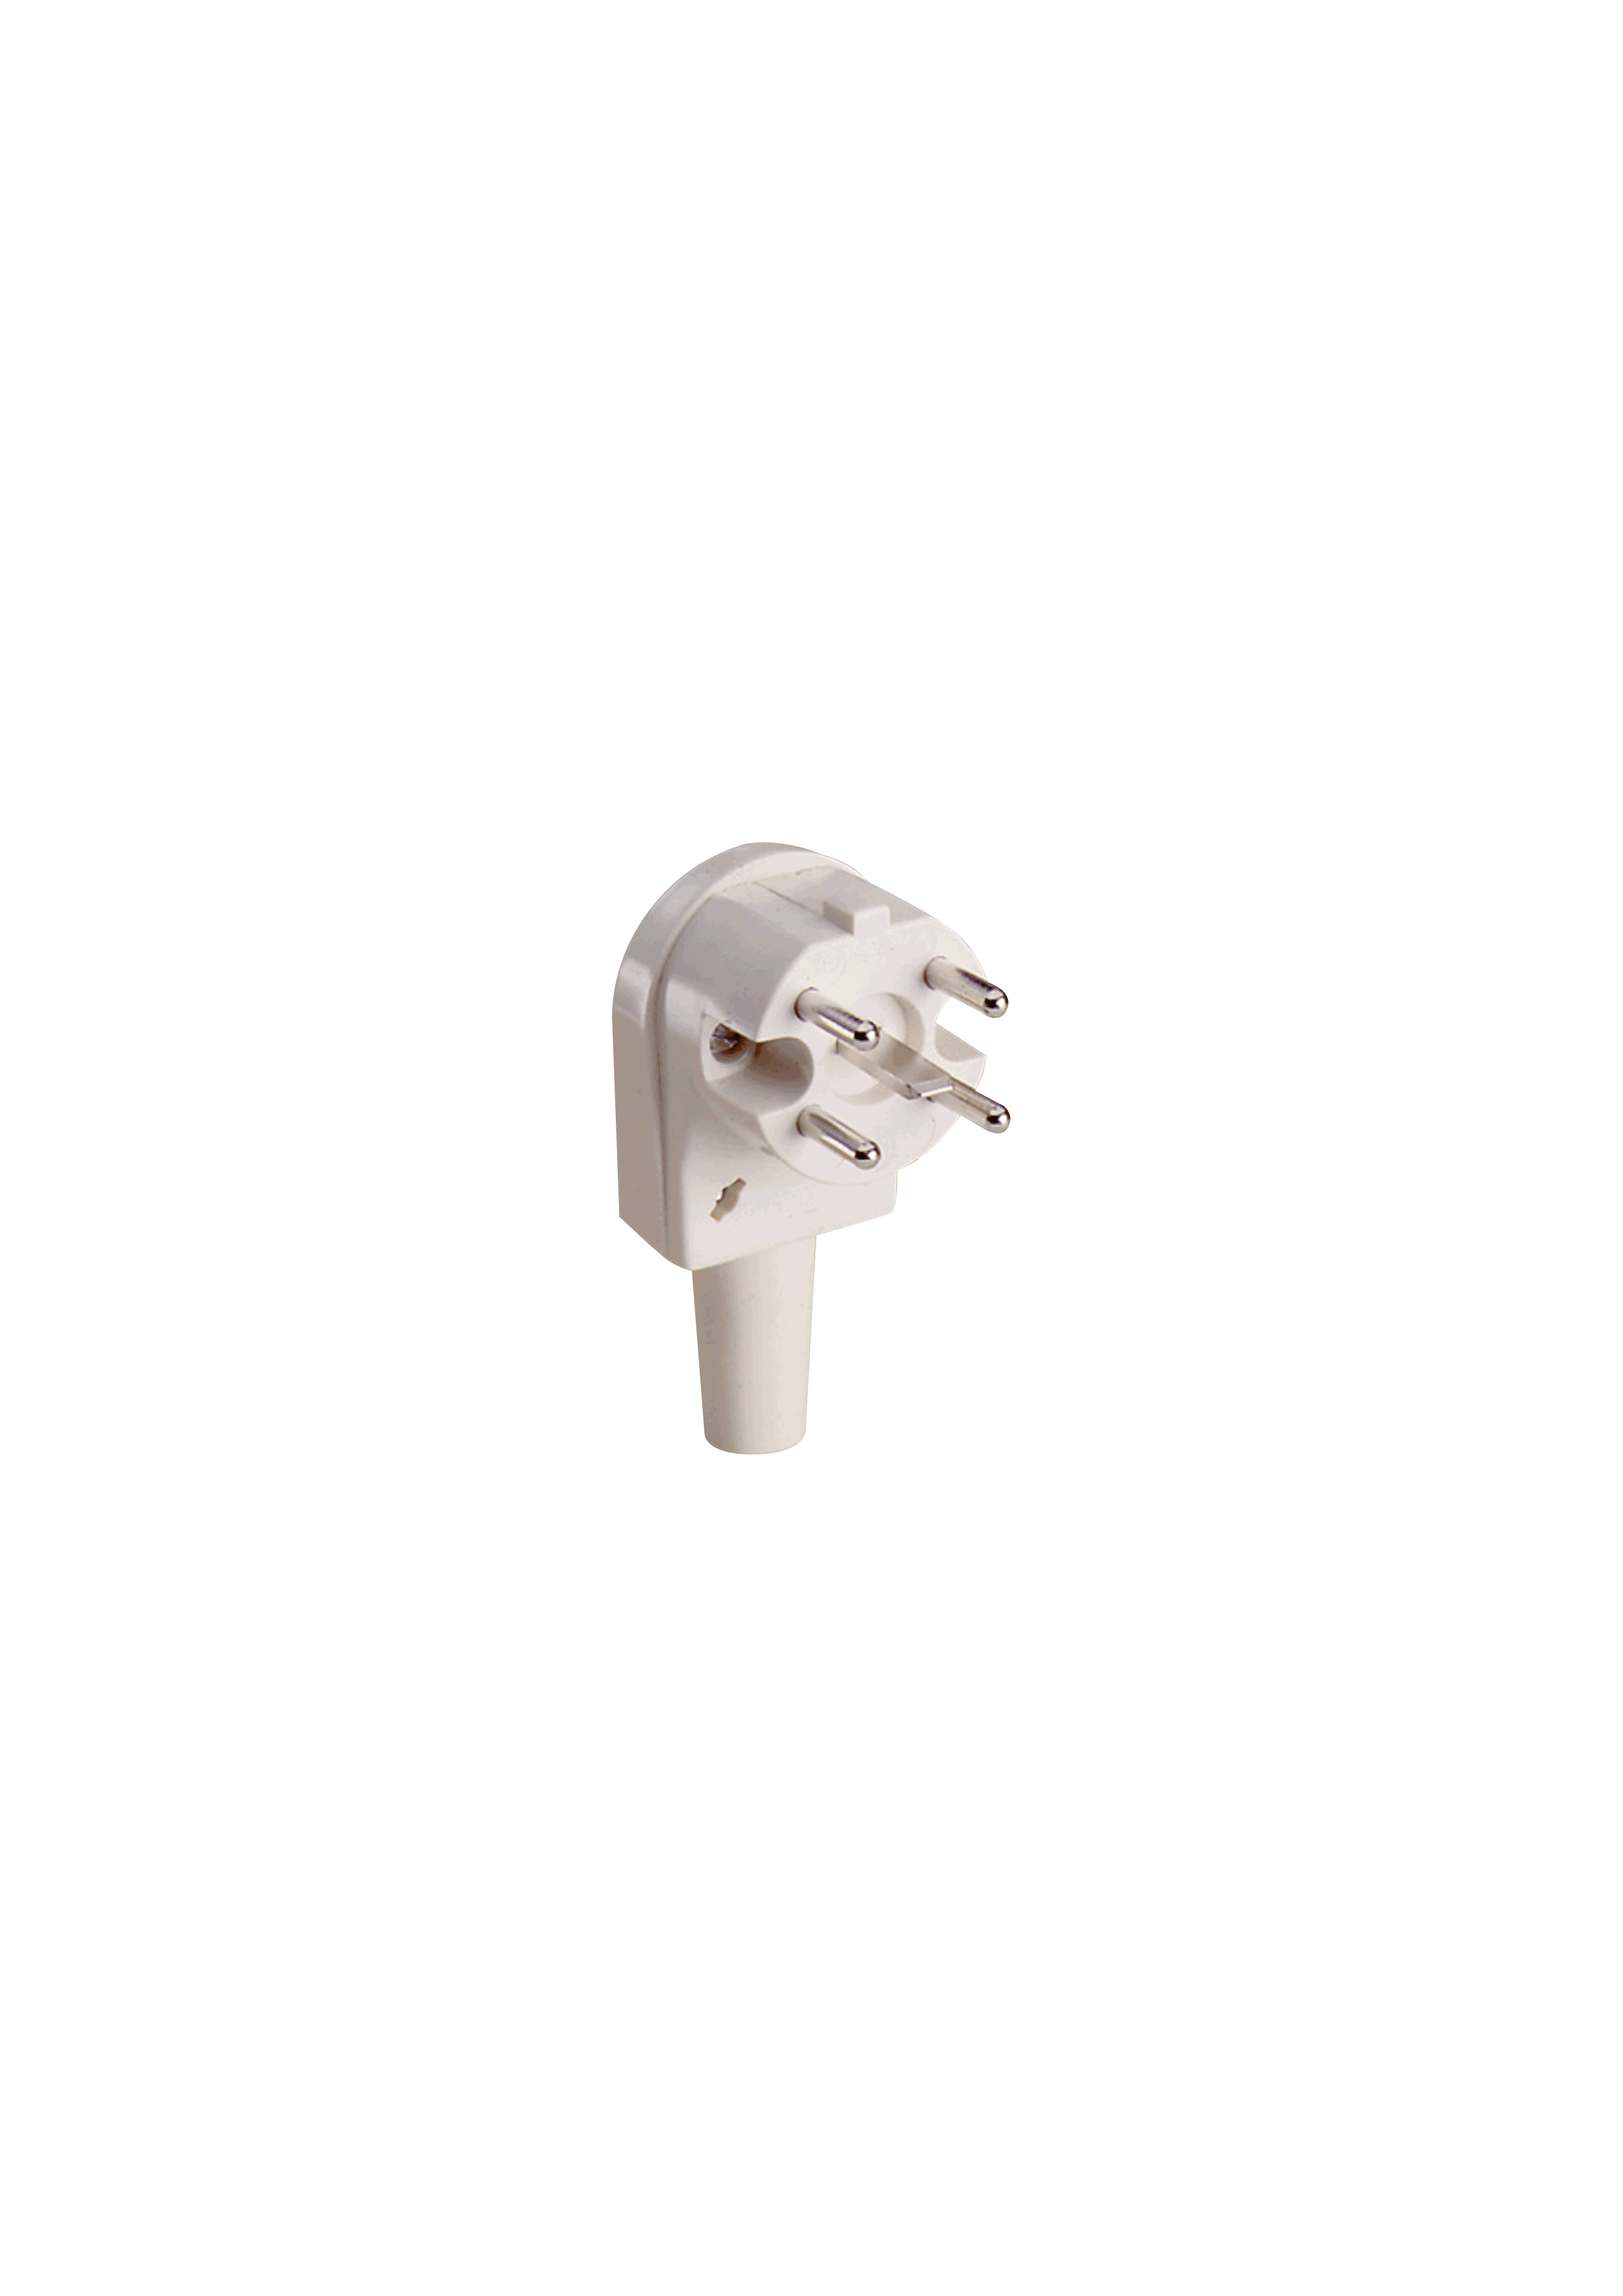 PERILEX angled plug, 16 A, white